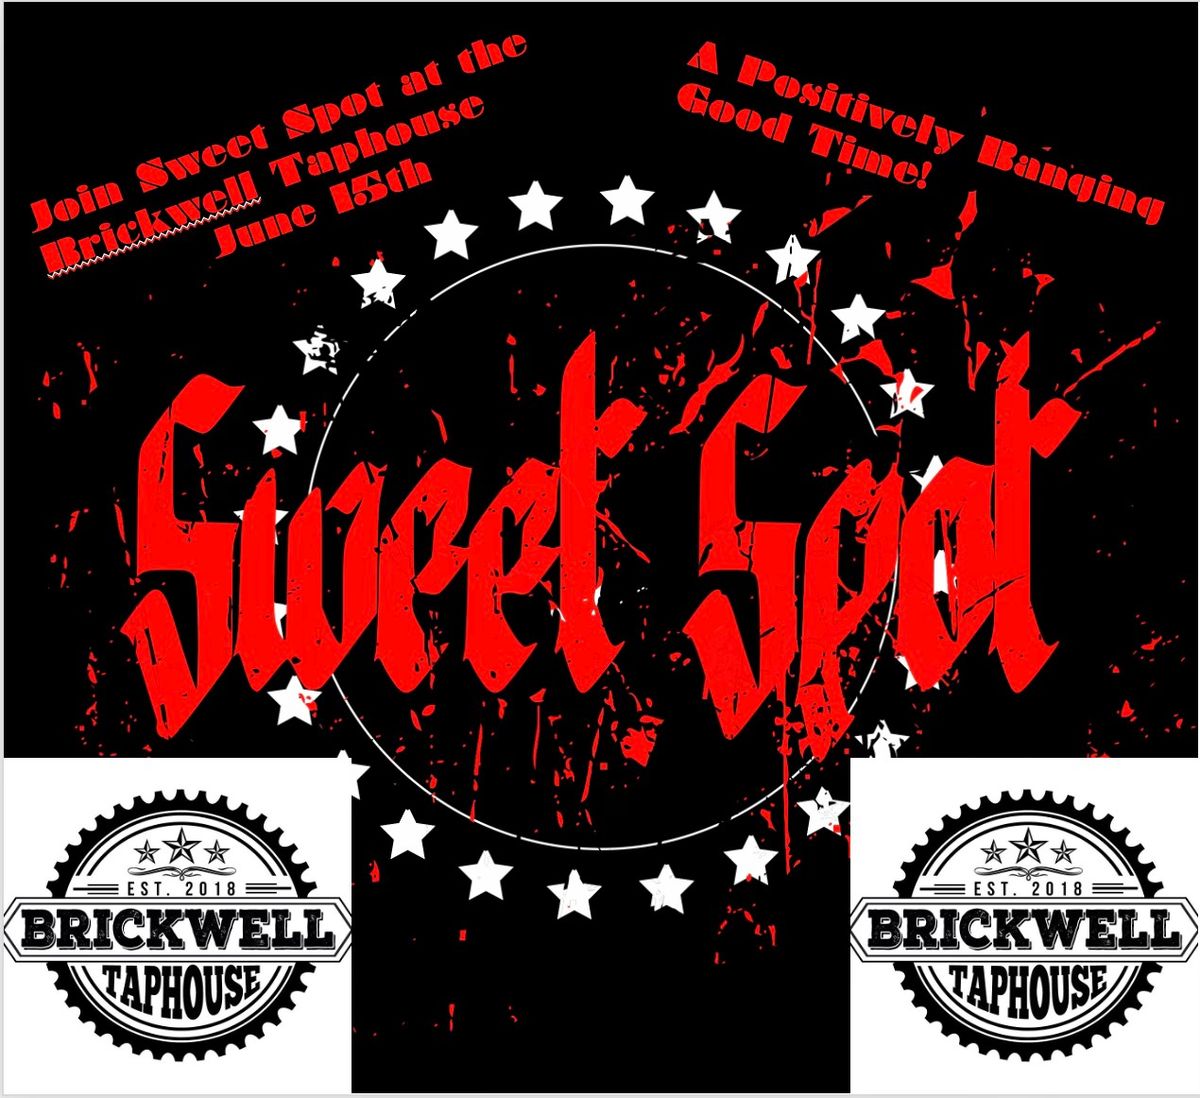 Sweet Spot Rocks the Brickwell June 15th